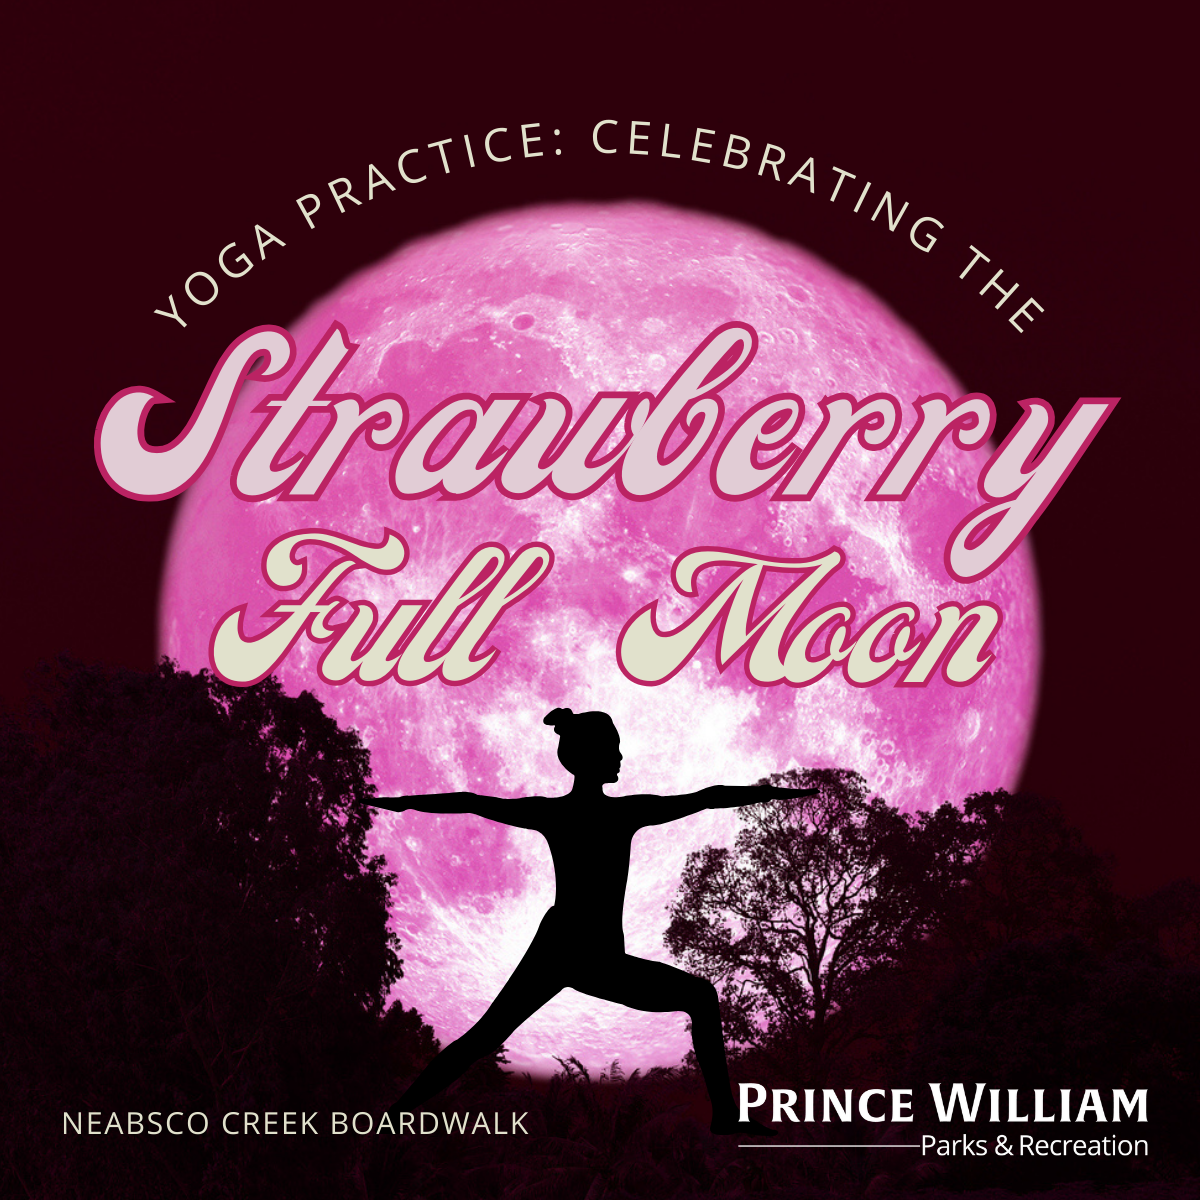 Strawberry Full Moon Yoga